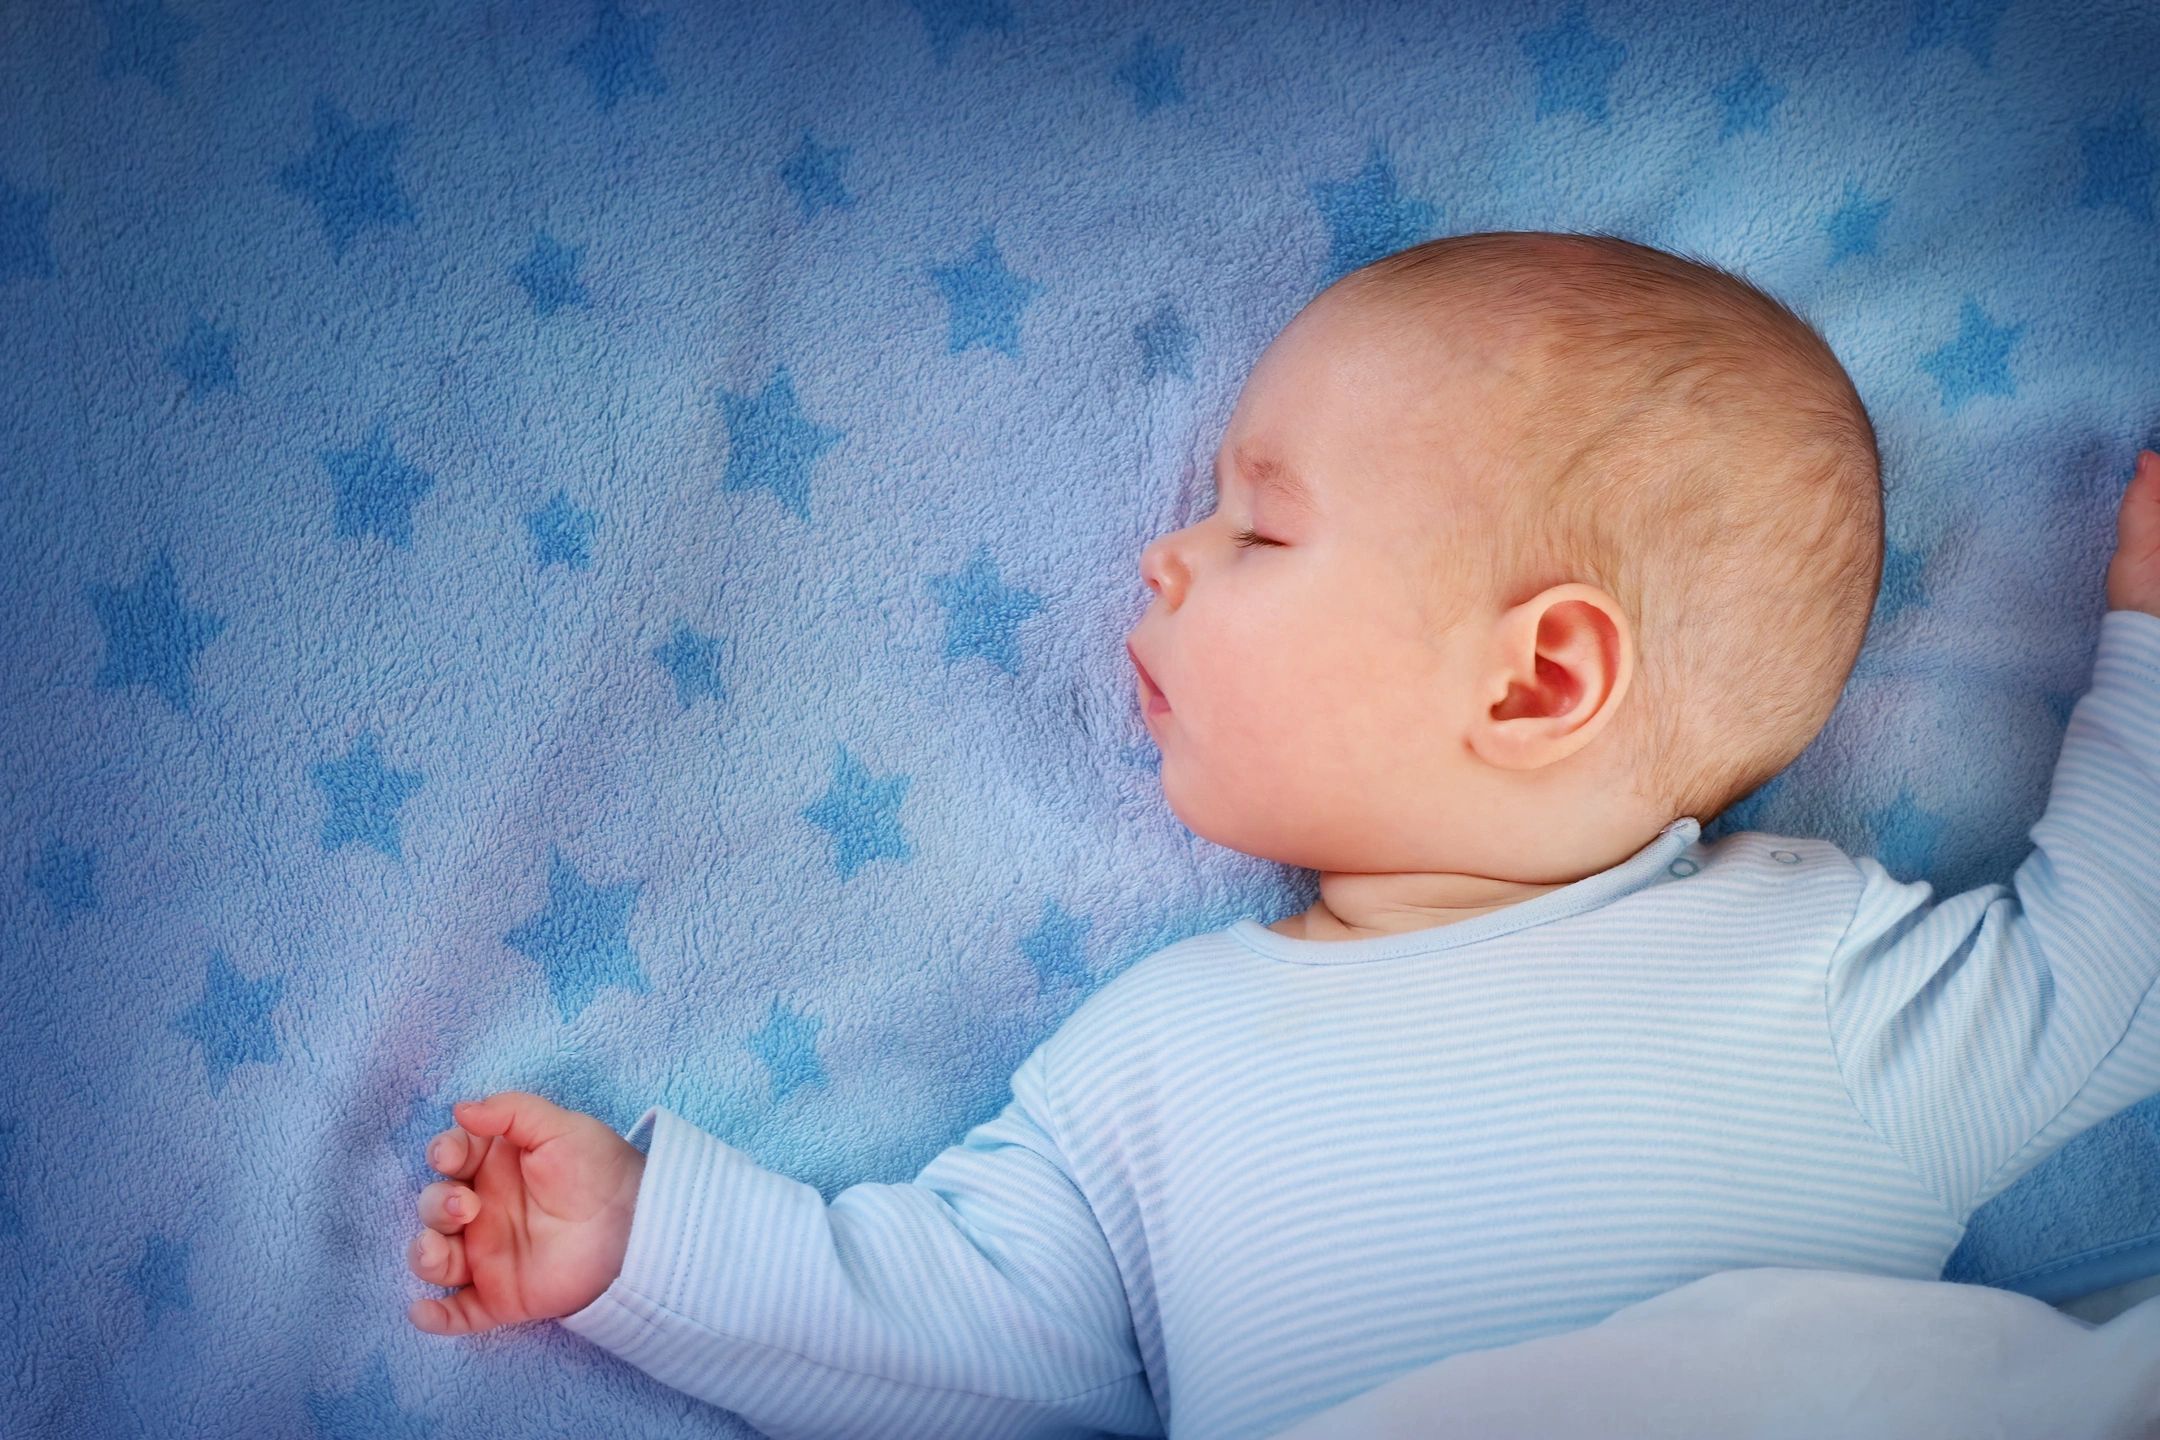 A baby boy asleep on a blue blanket.